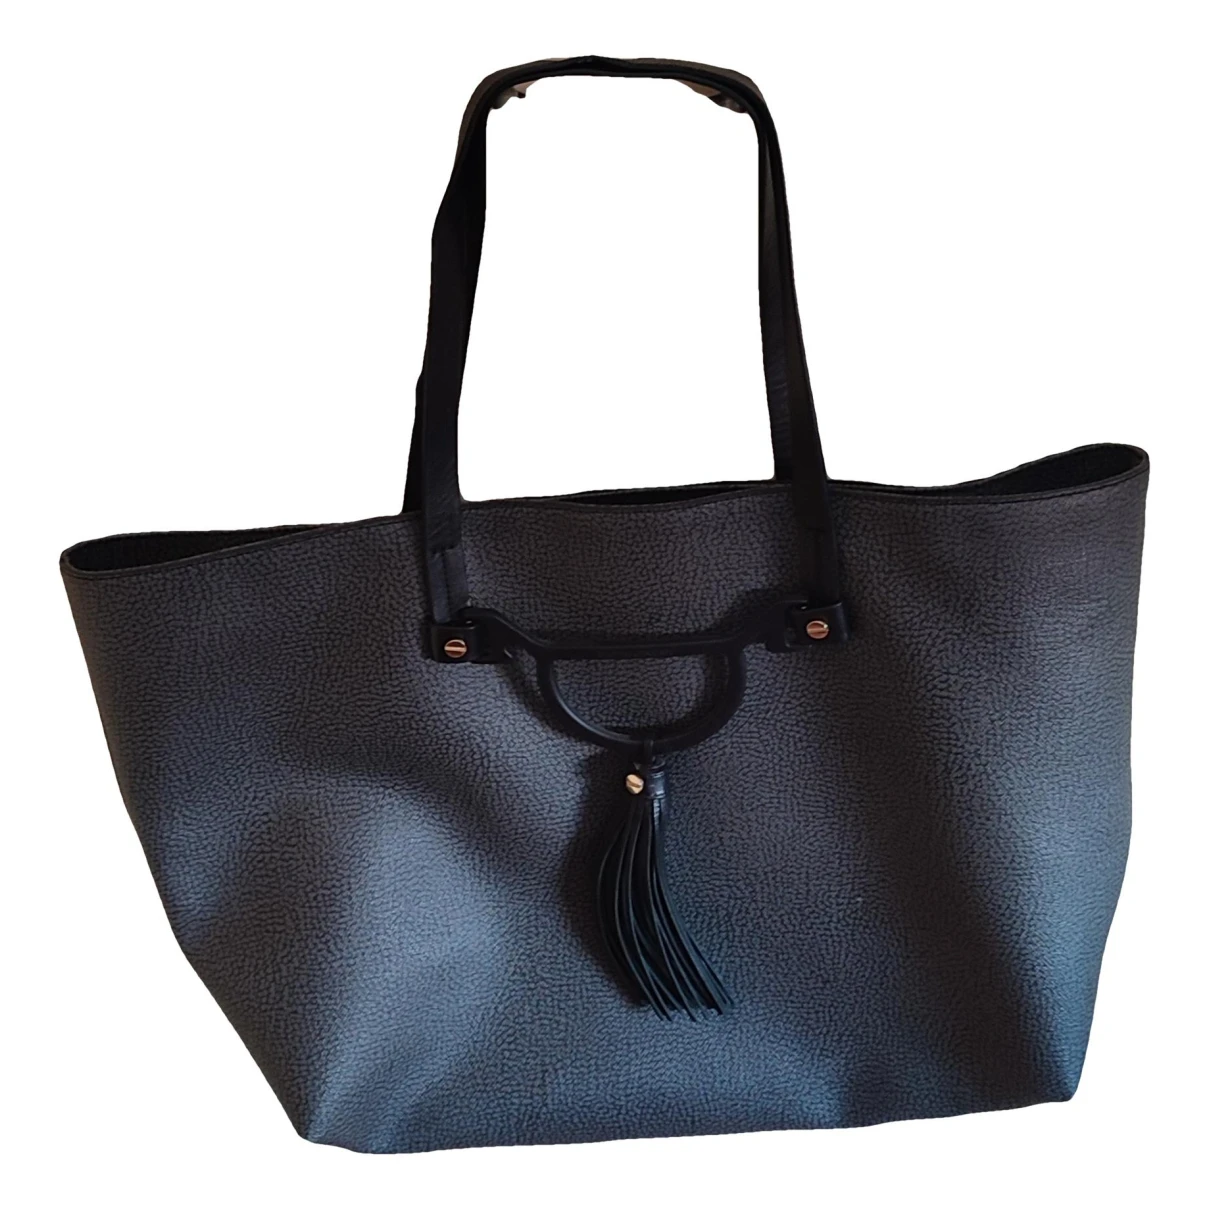 Pre-owned Borbonese Leather Handbag In Grey